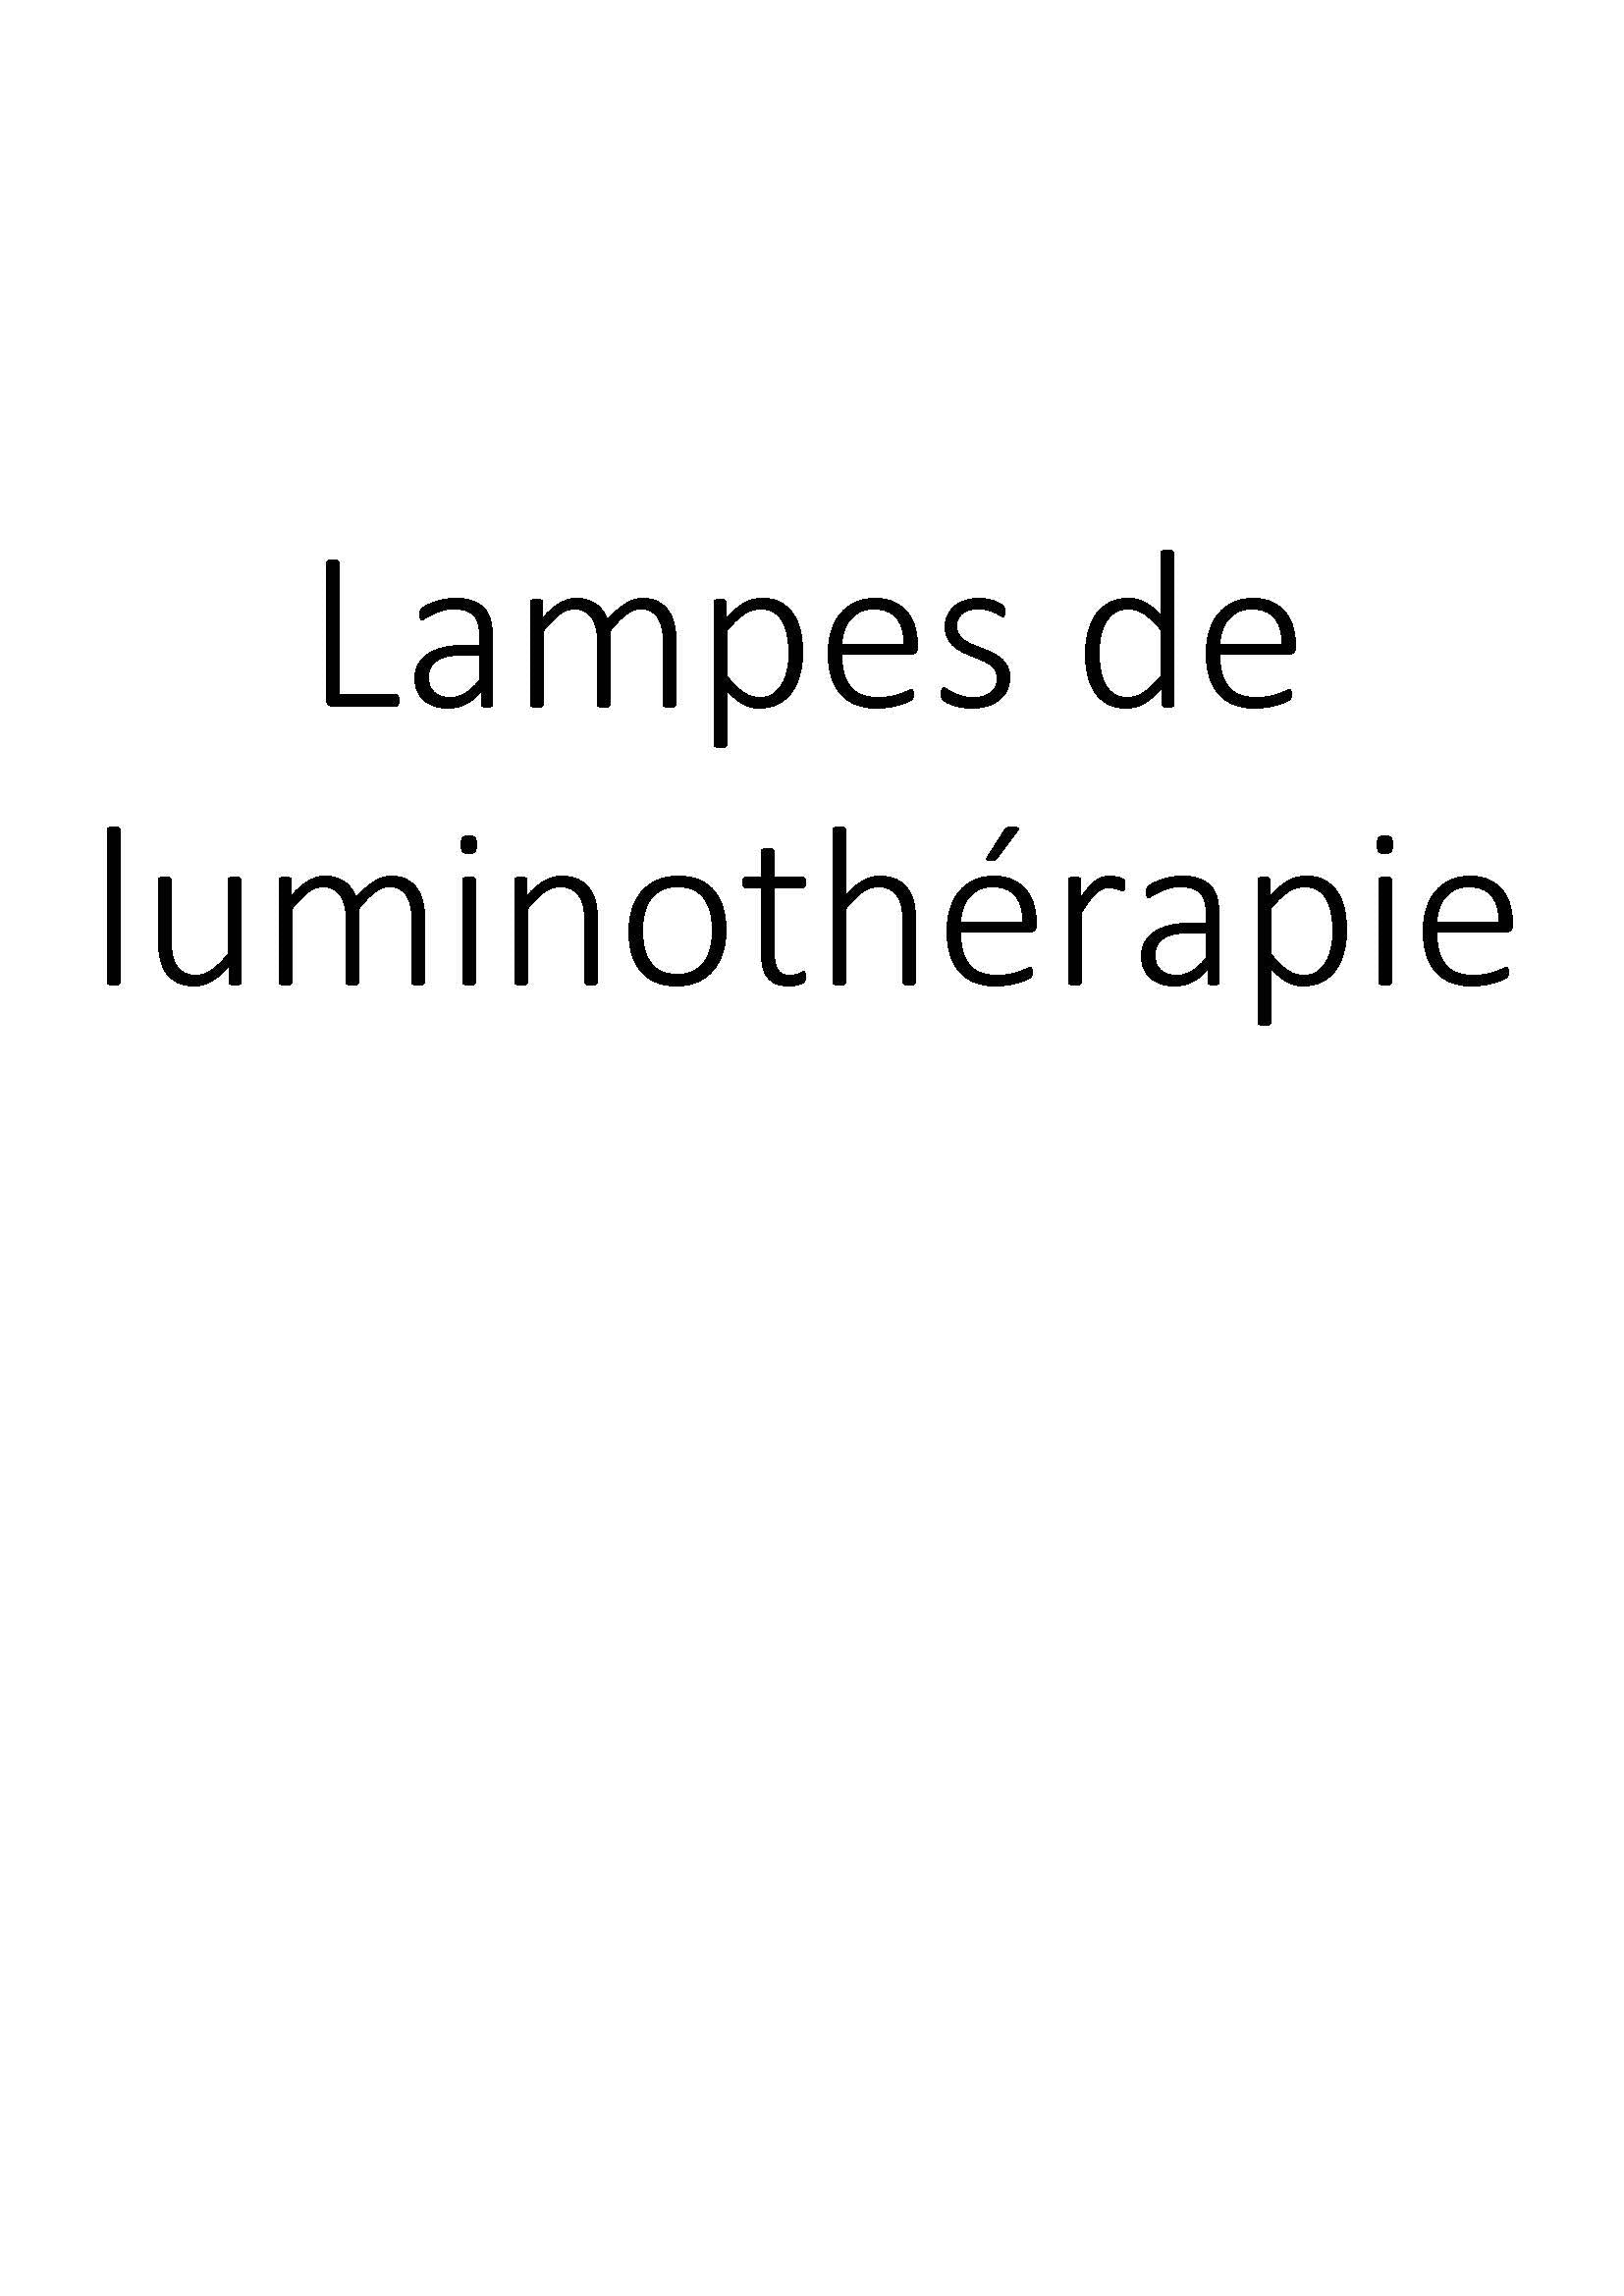 Lampes de luminothérapie clicktofournisseur.com